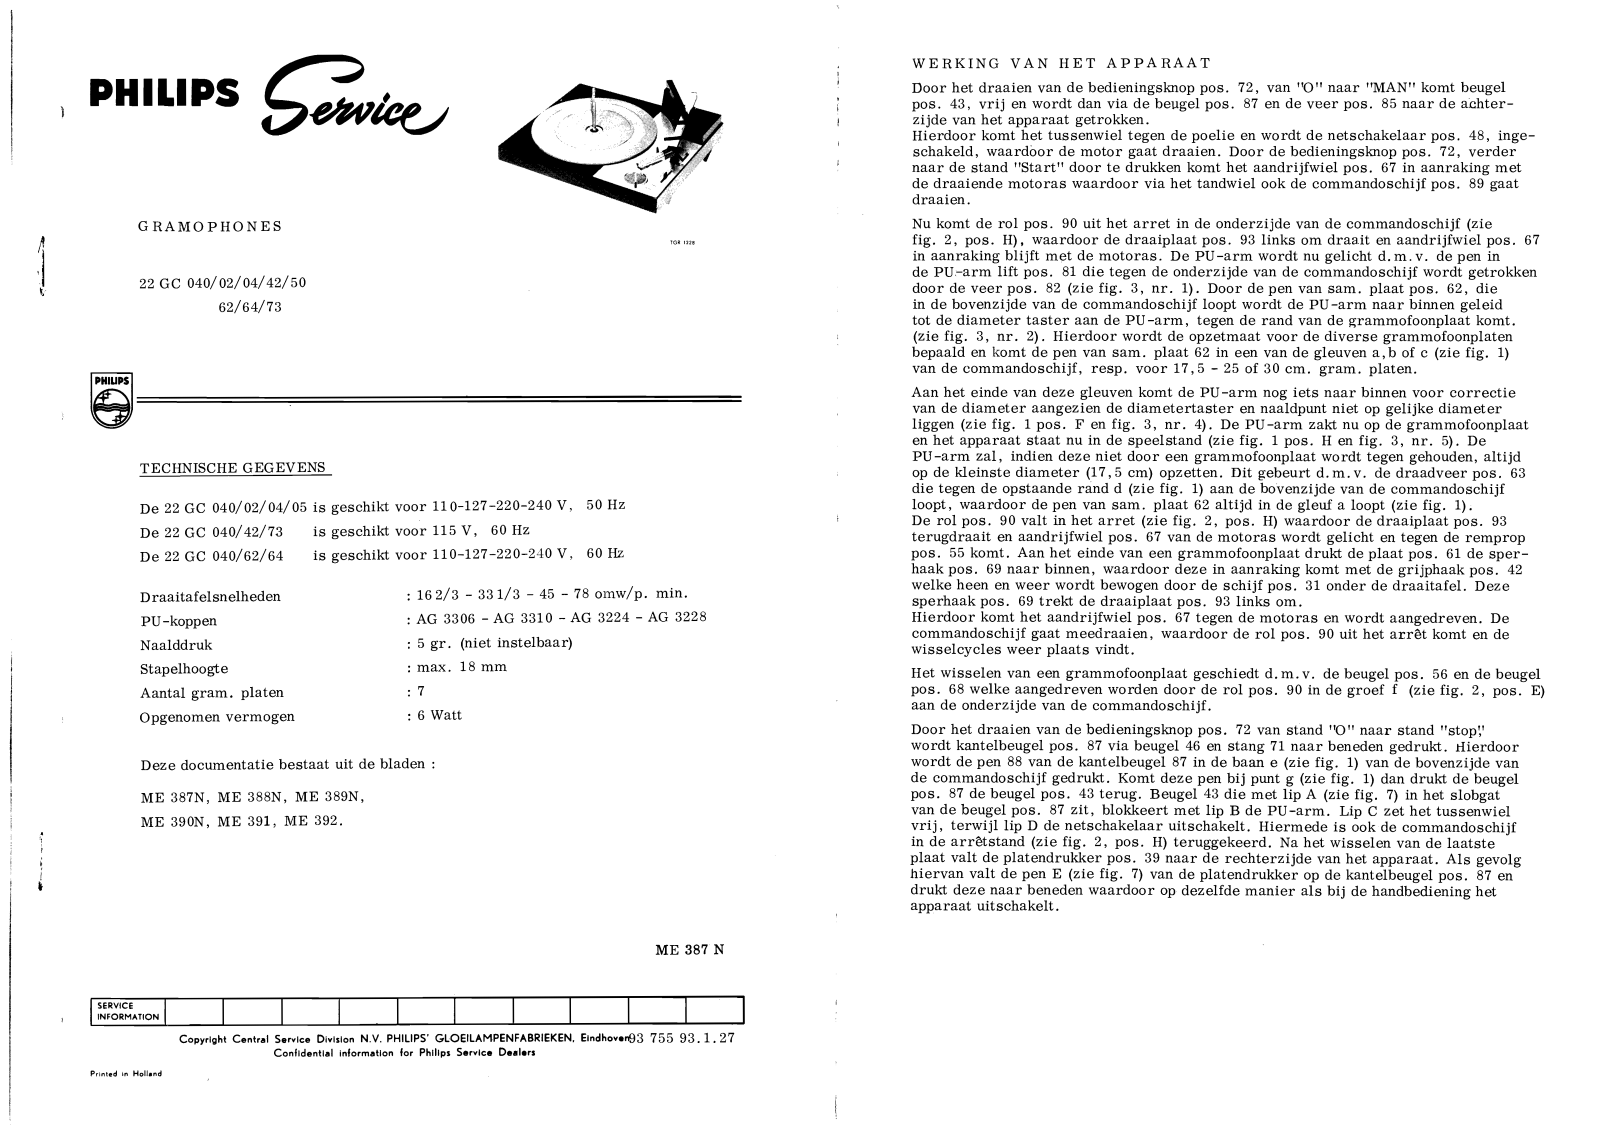 Philips 22-GC-040 Service Manual